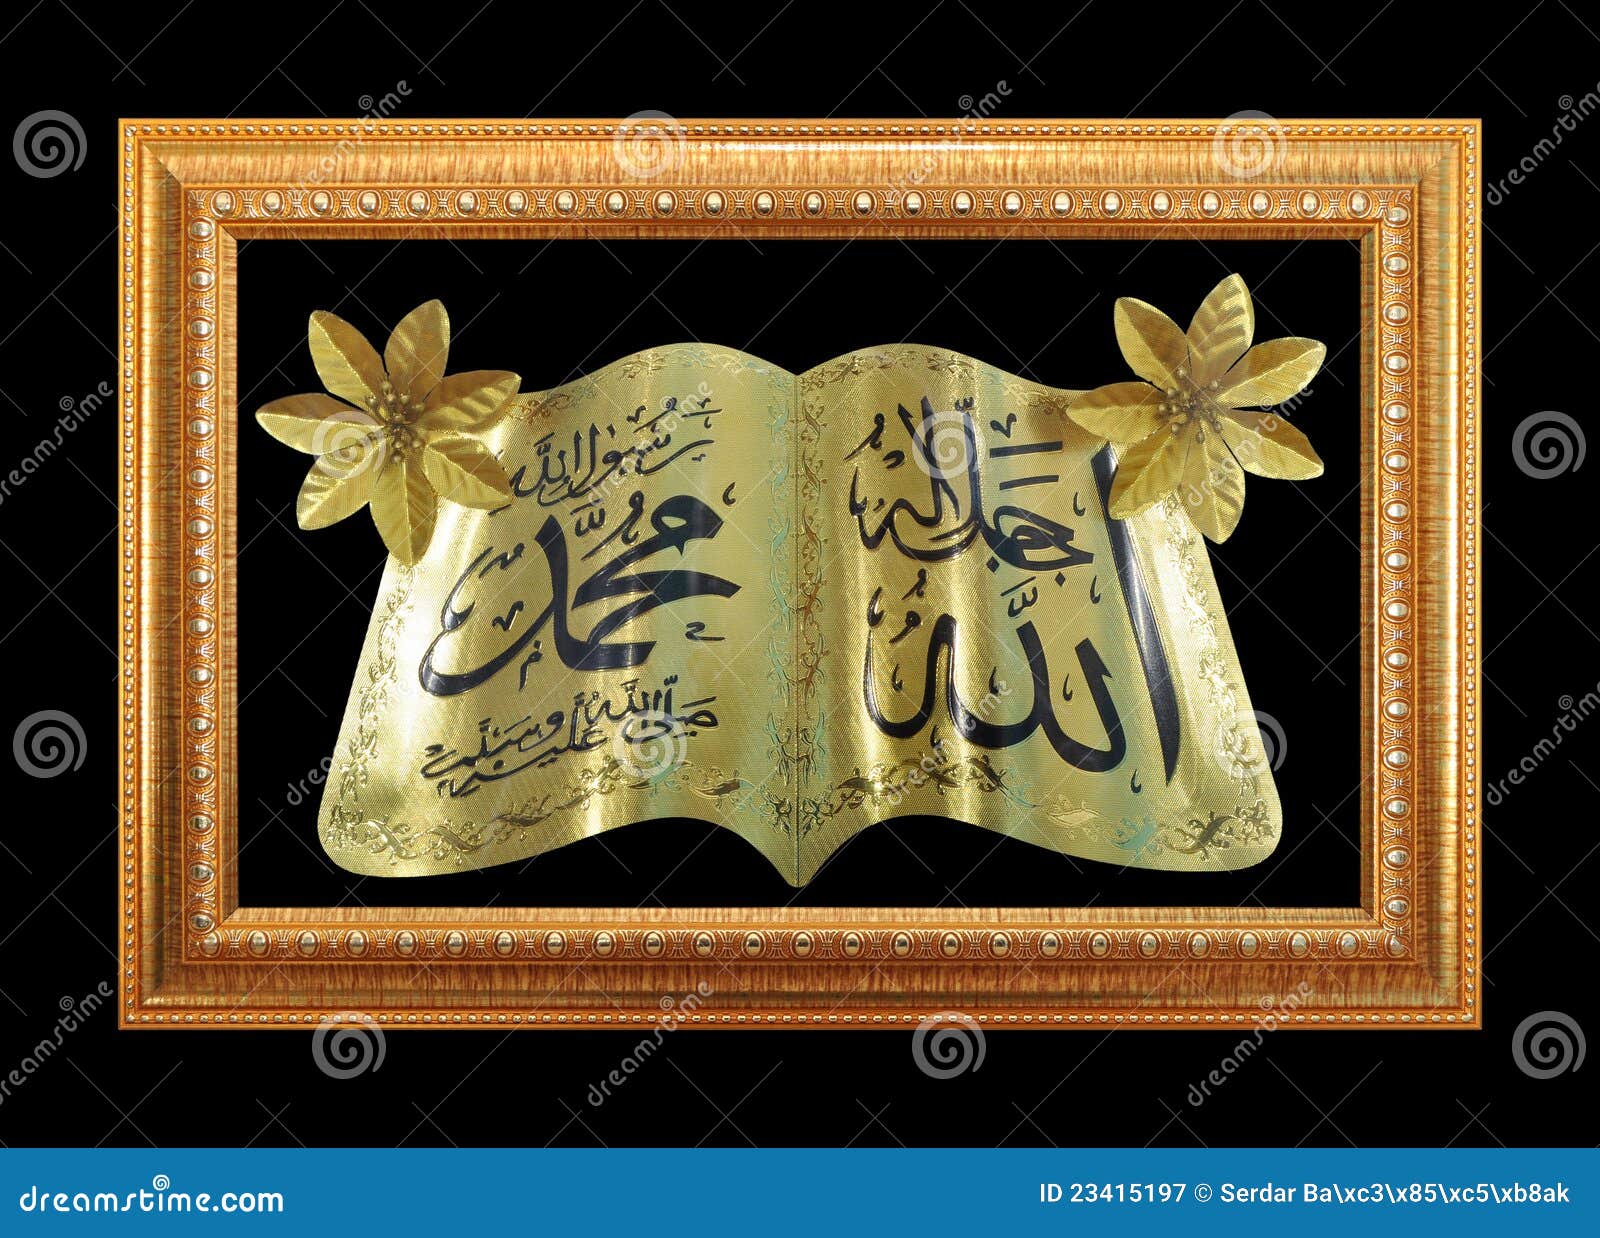 Gold Frame And Islamic Writing Stock Image Image of